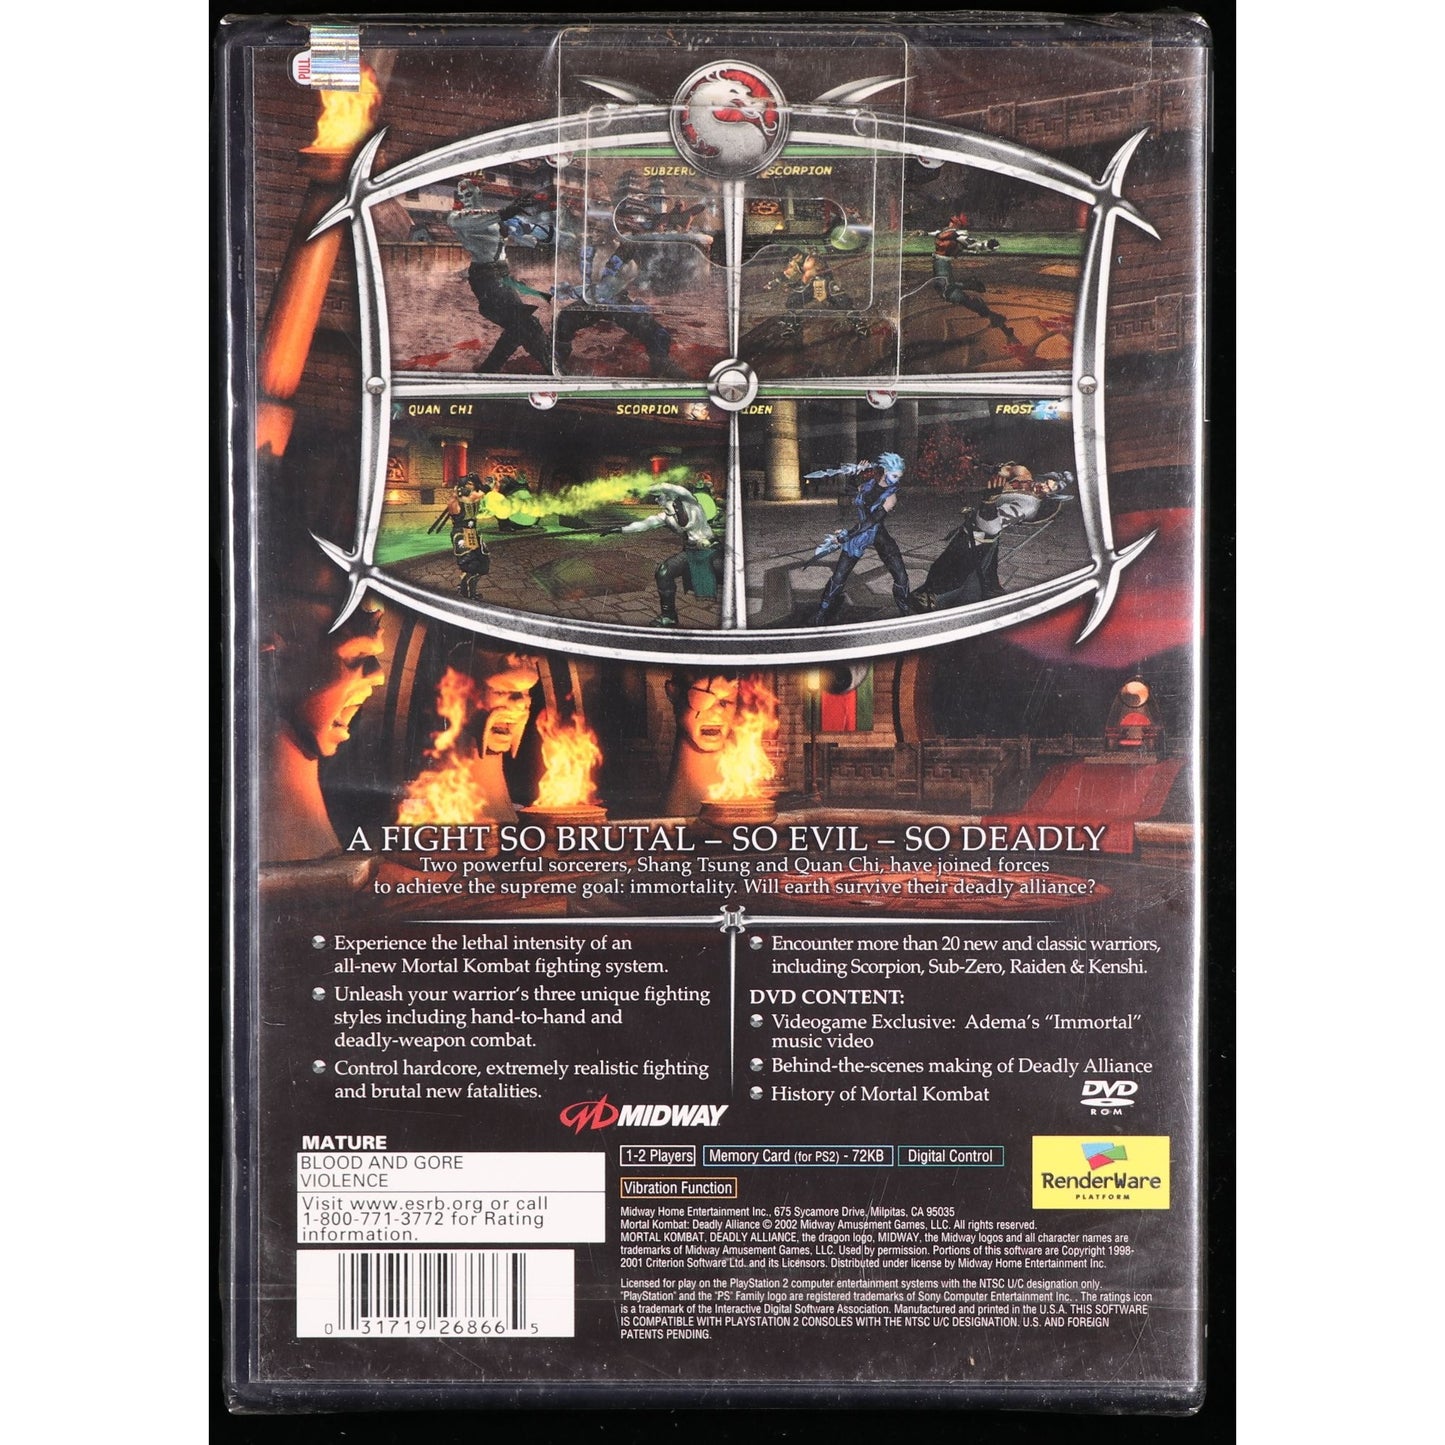 Mortal Kombat: Deadly Alliance (2002) PlayStation 2 Midway WATA 9.2 Sealed A